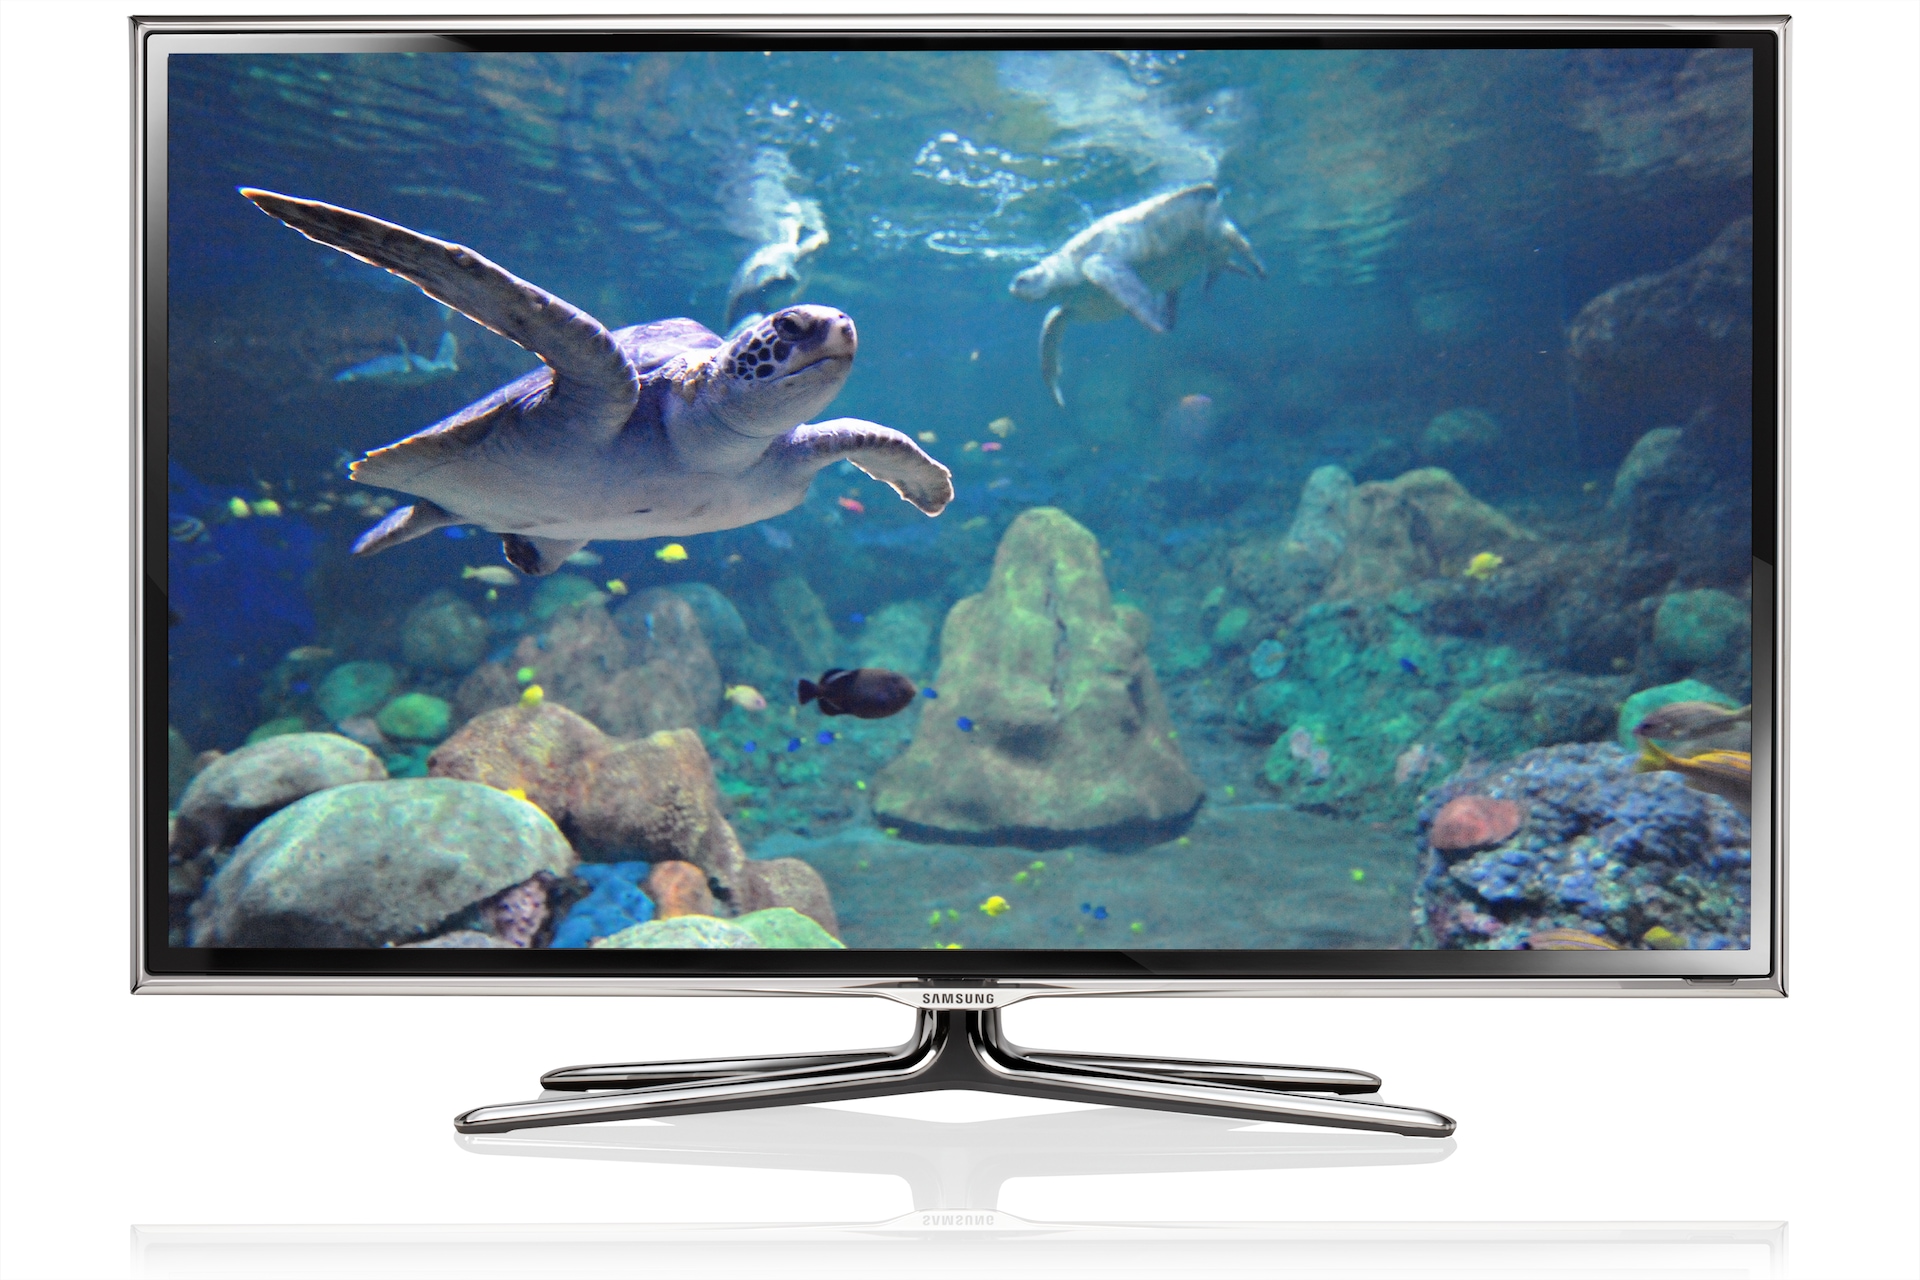 verkoudheid Fascineren wit 2012] UA46ES6600R Smart 46-Inch Full HD LED TV | Samsung Support Gulf